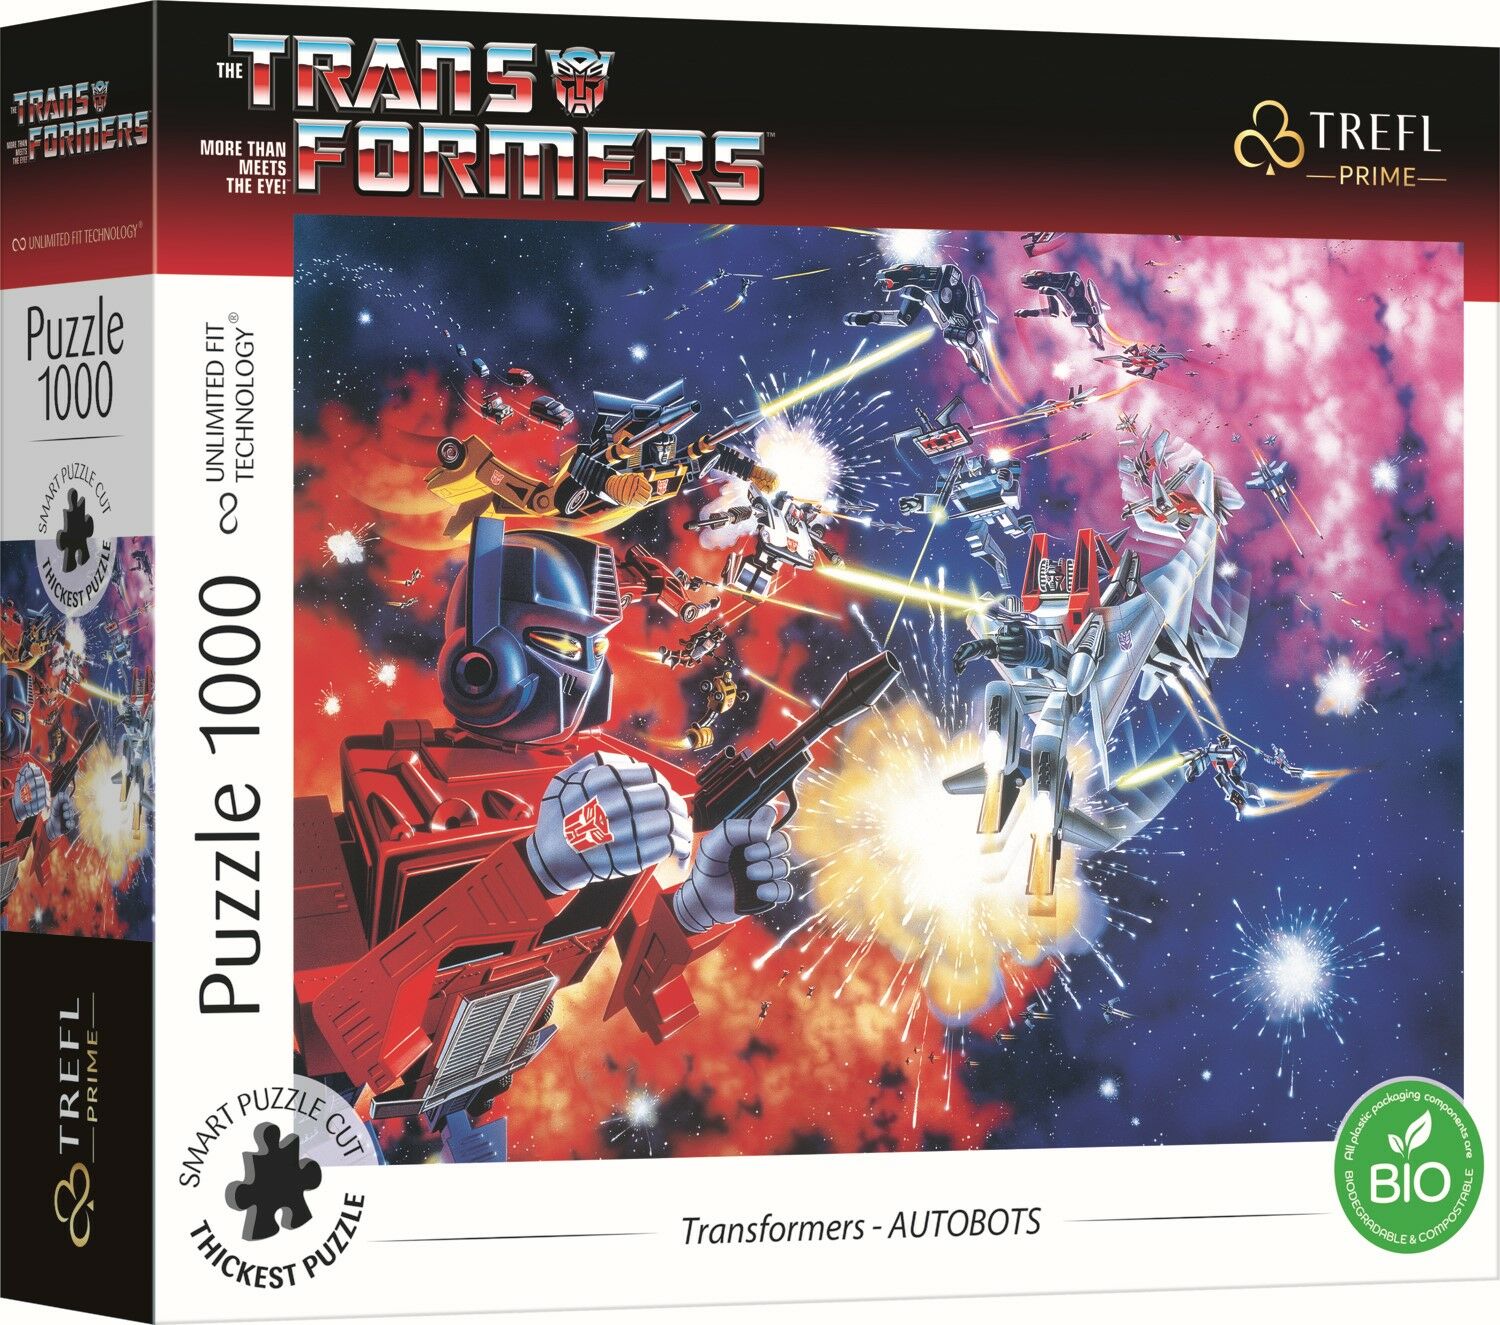 Trefl Prime UFT Transformers Autobots Puzzle 1000 Teile von Transformers